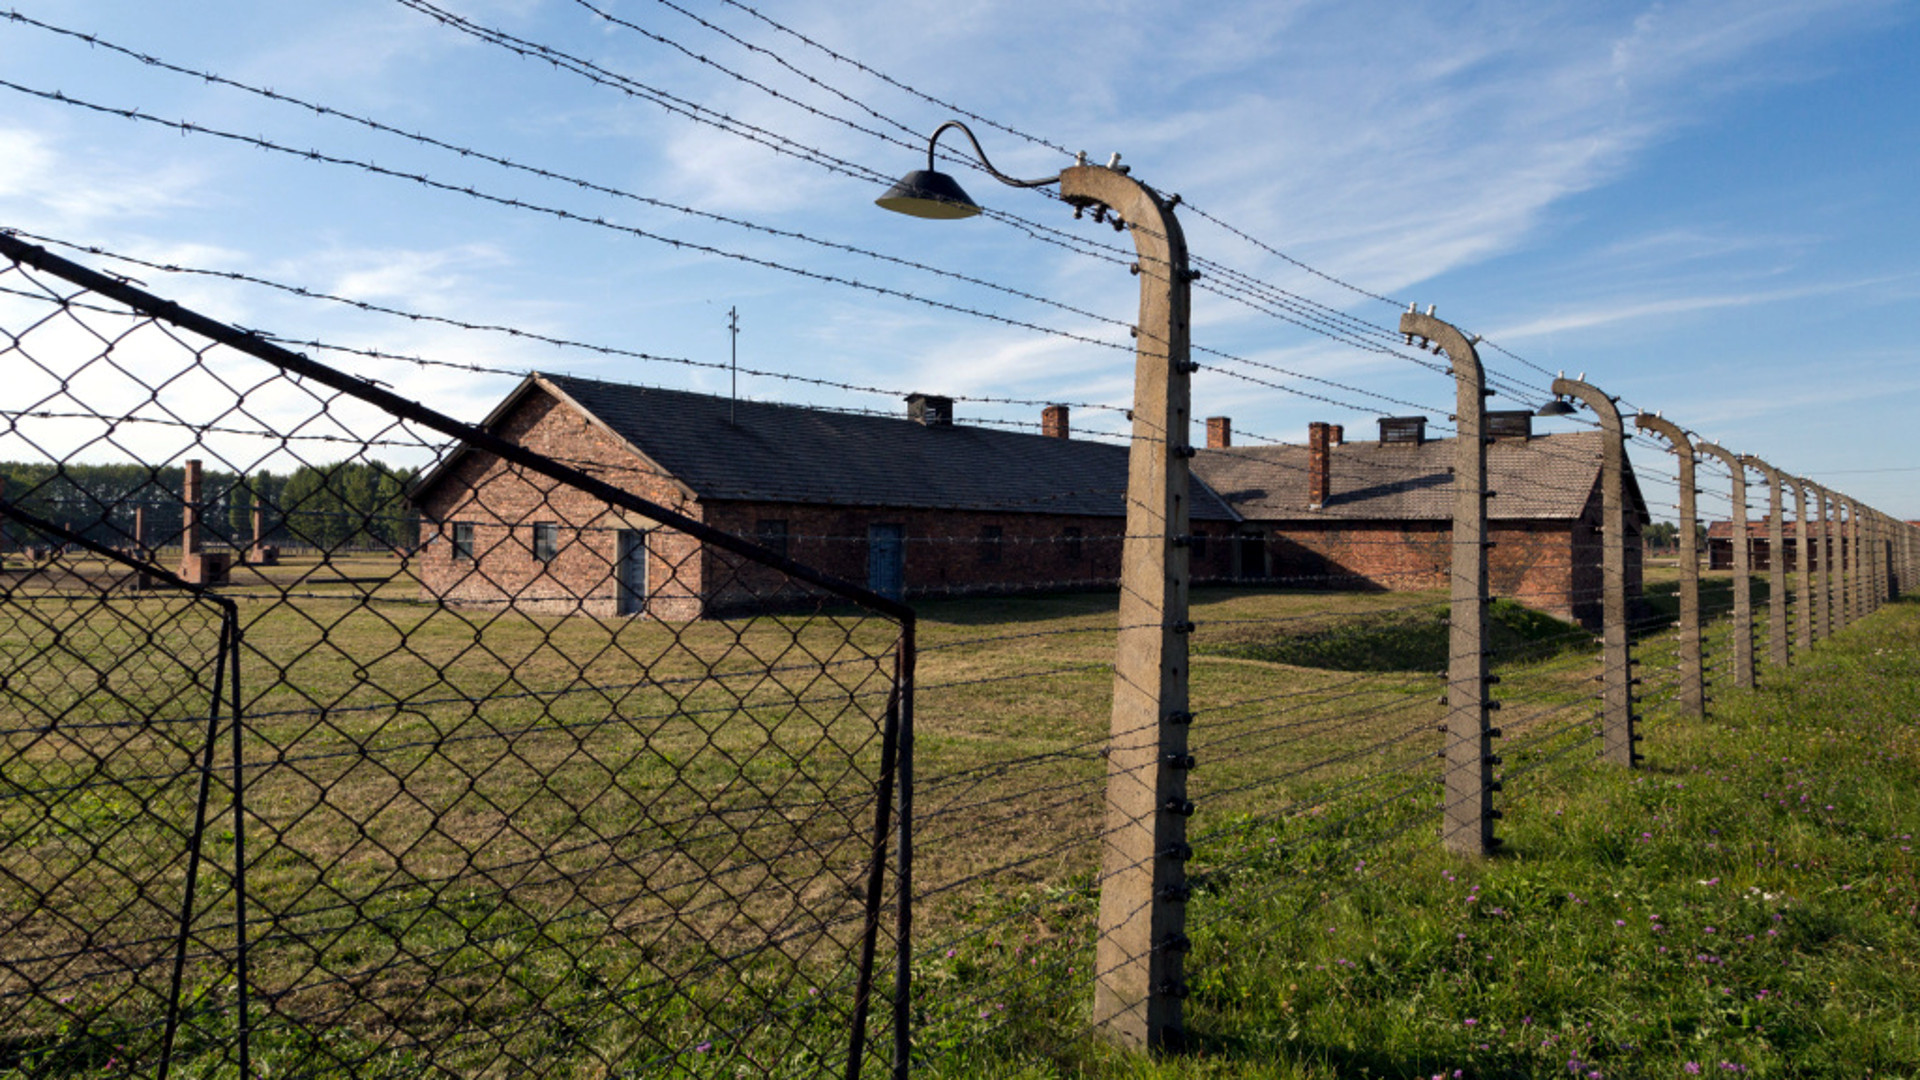 Baracke im Konzentrationslager Auschwitz-Birkenau